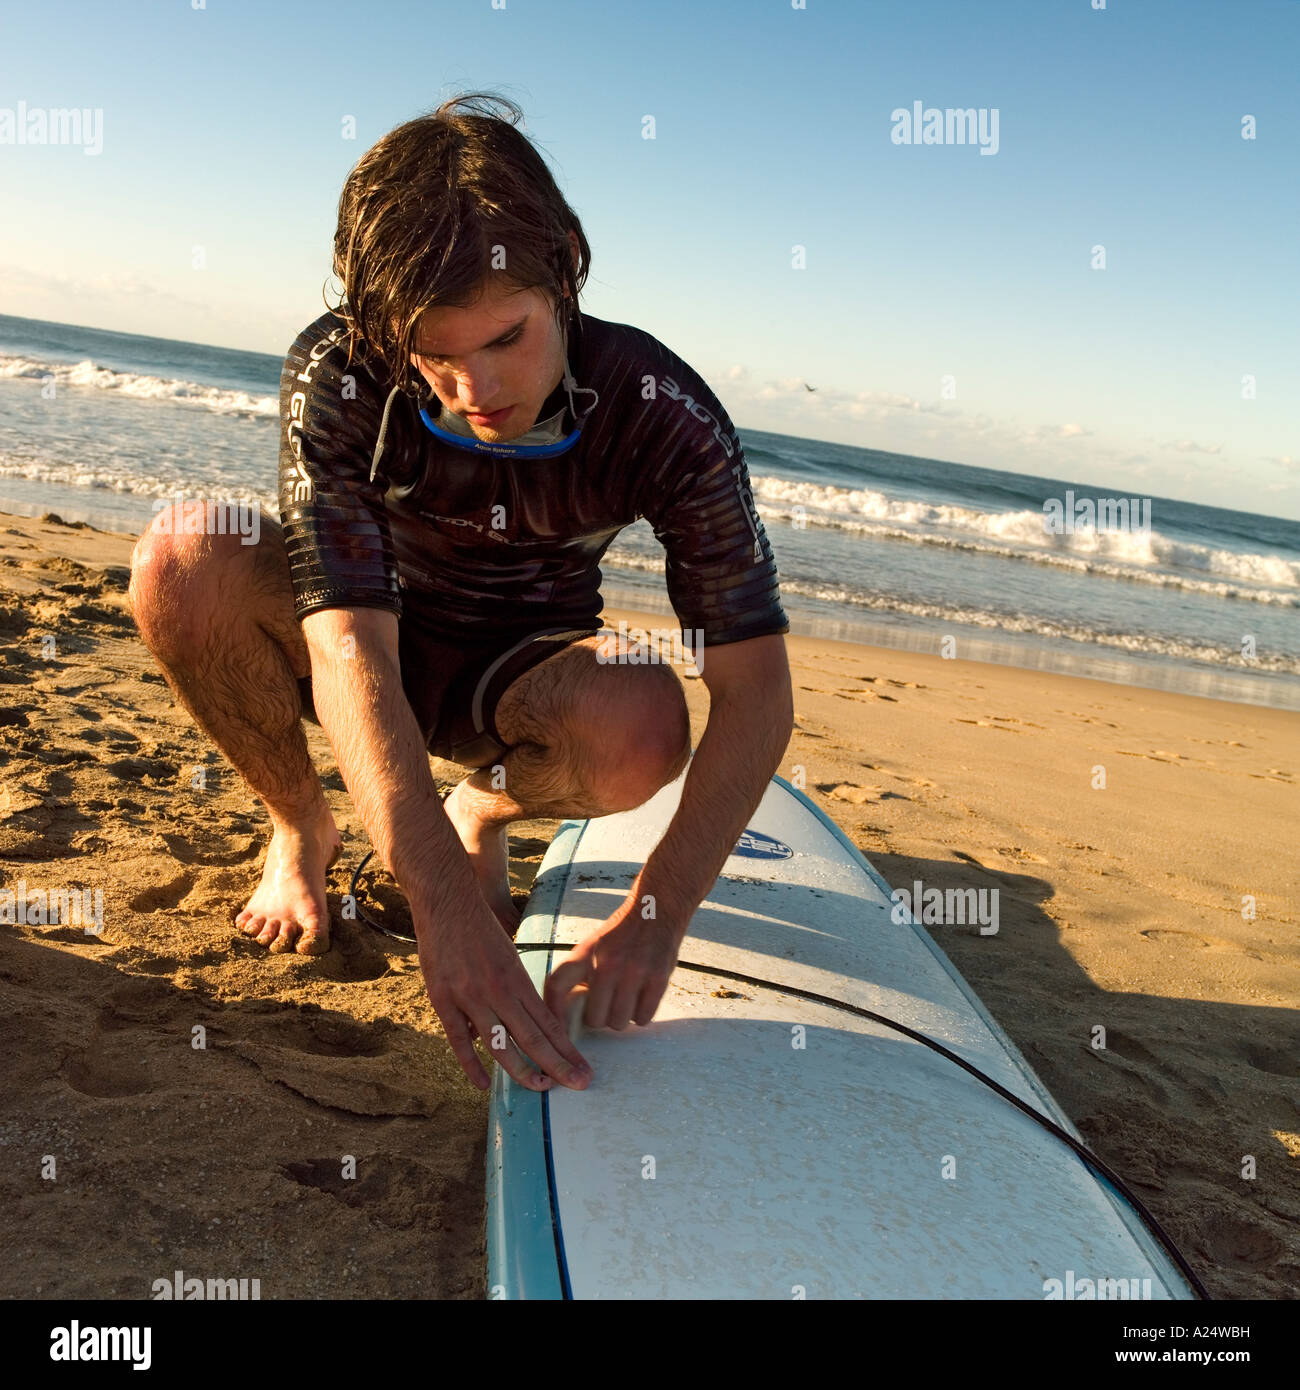 A surfer waxes his board on the Playa Bruja beach in Mazatlan Mexico Stock Photo